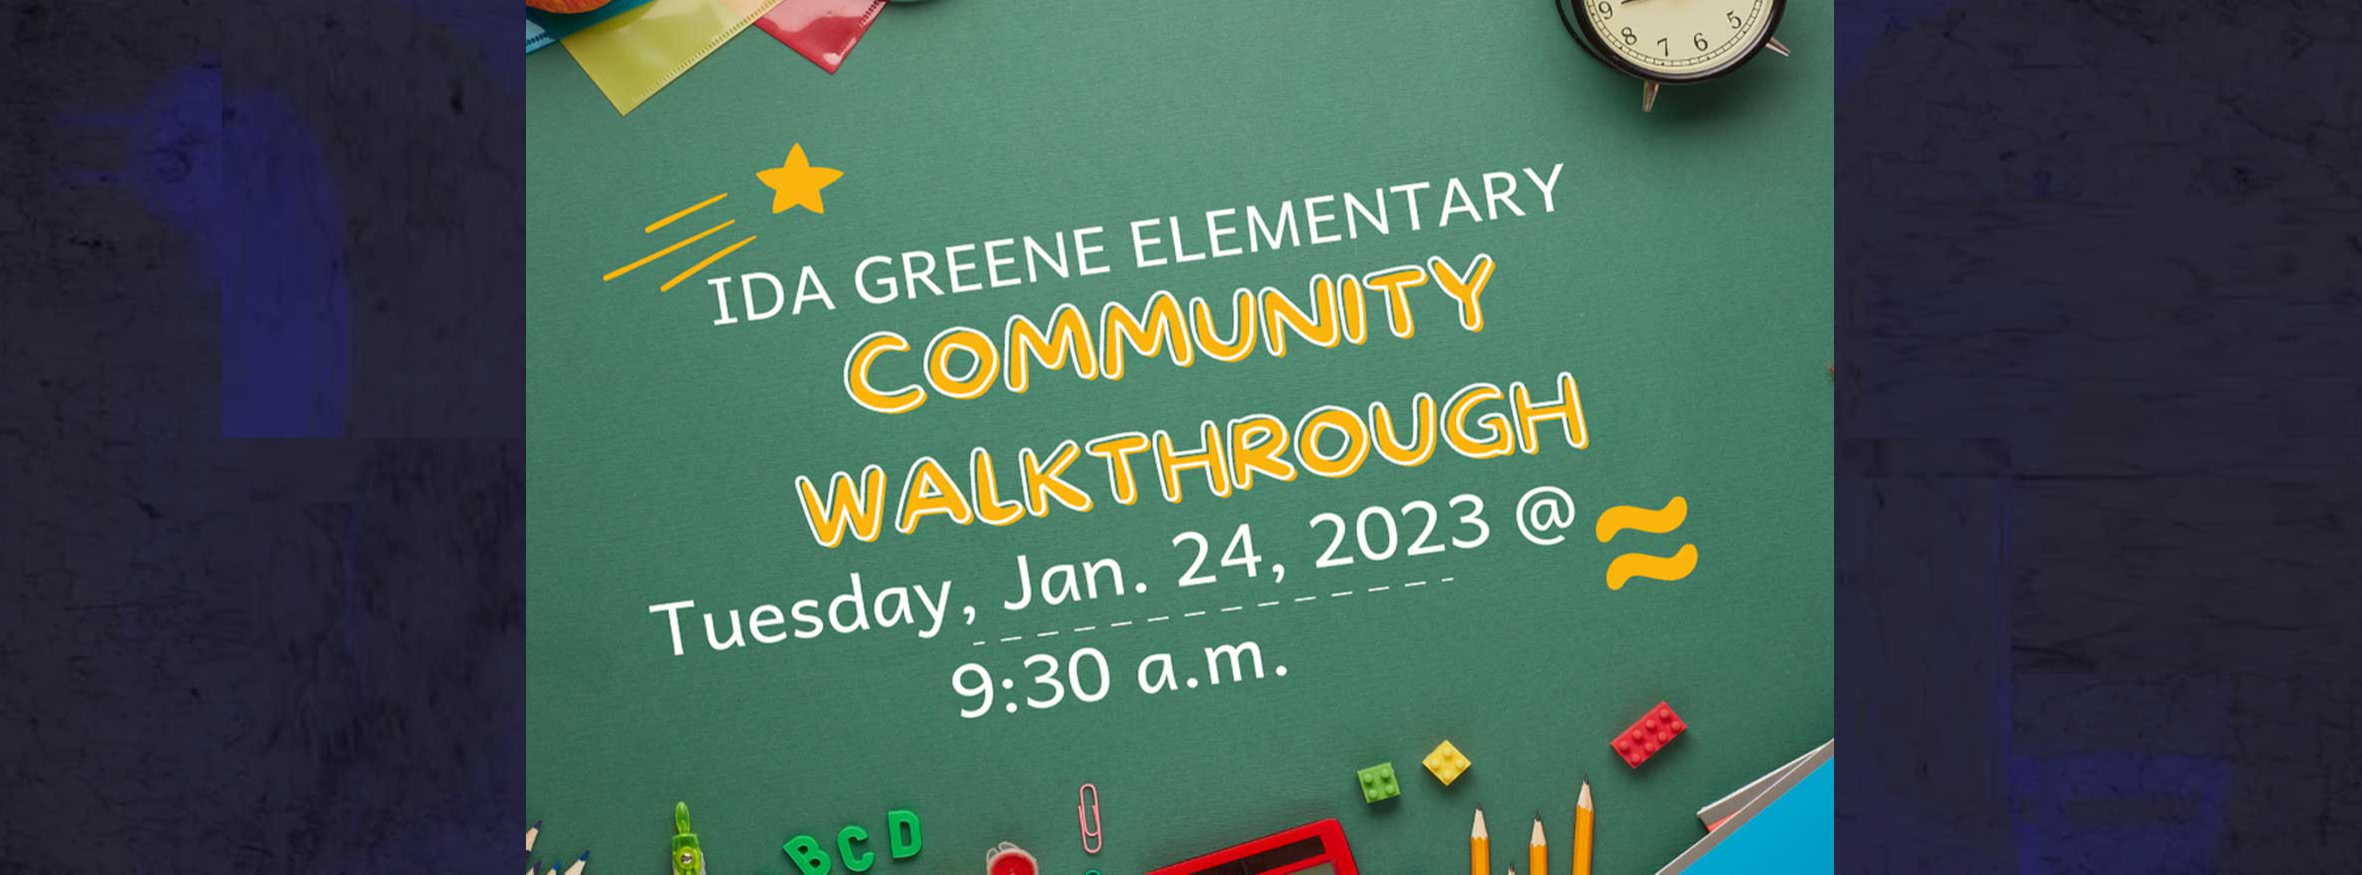 Ida Greene Elementary Community Walkthrough